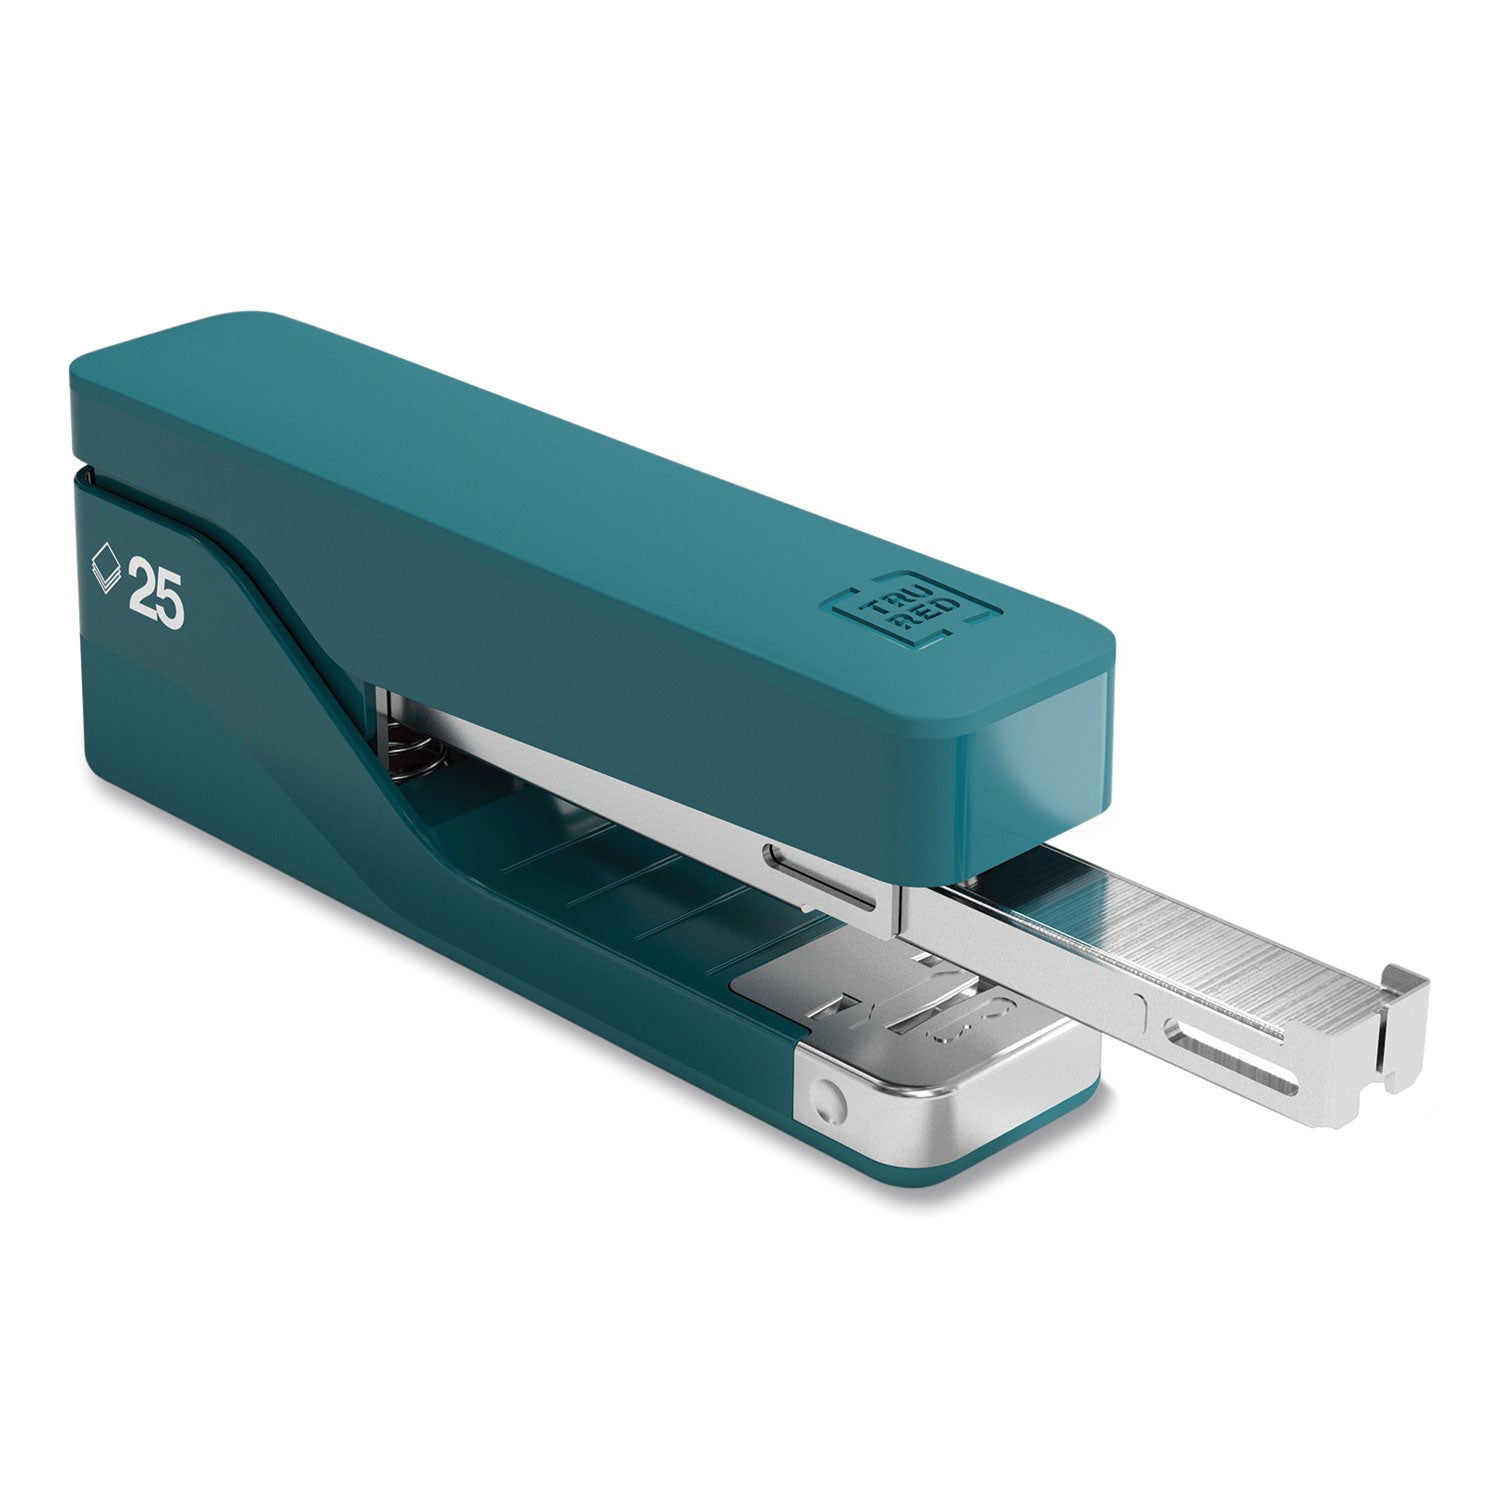 desktop-aluminum-stapler-25-sheet-capacity-teal_tud24418165 - 2